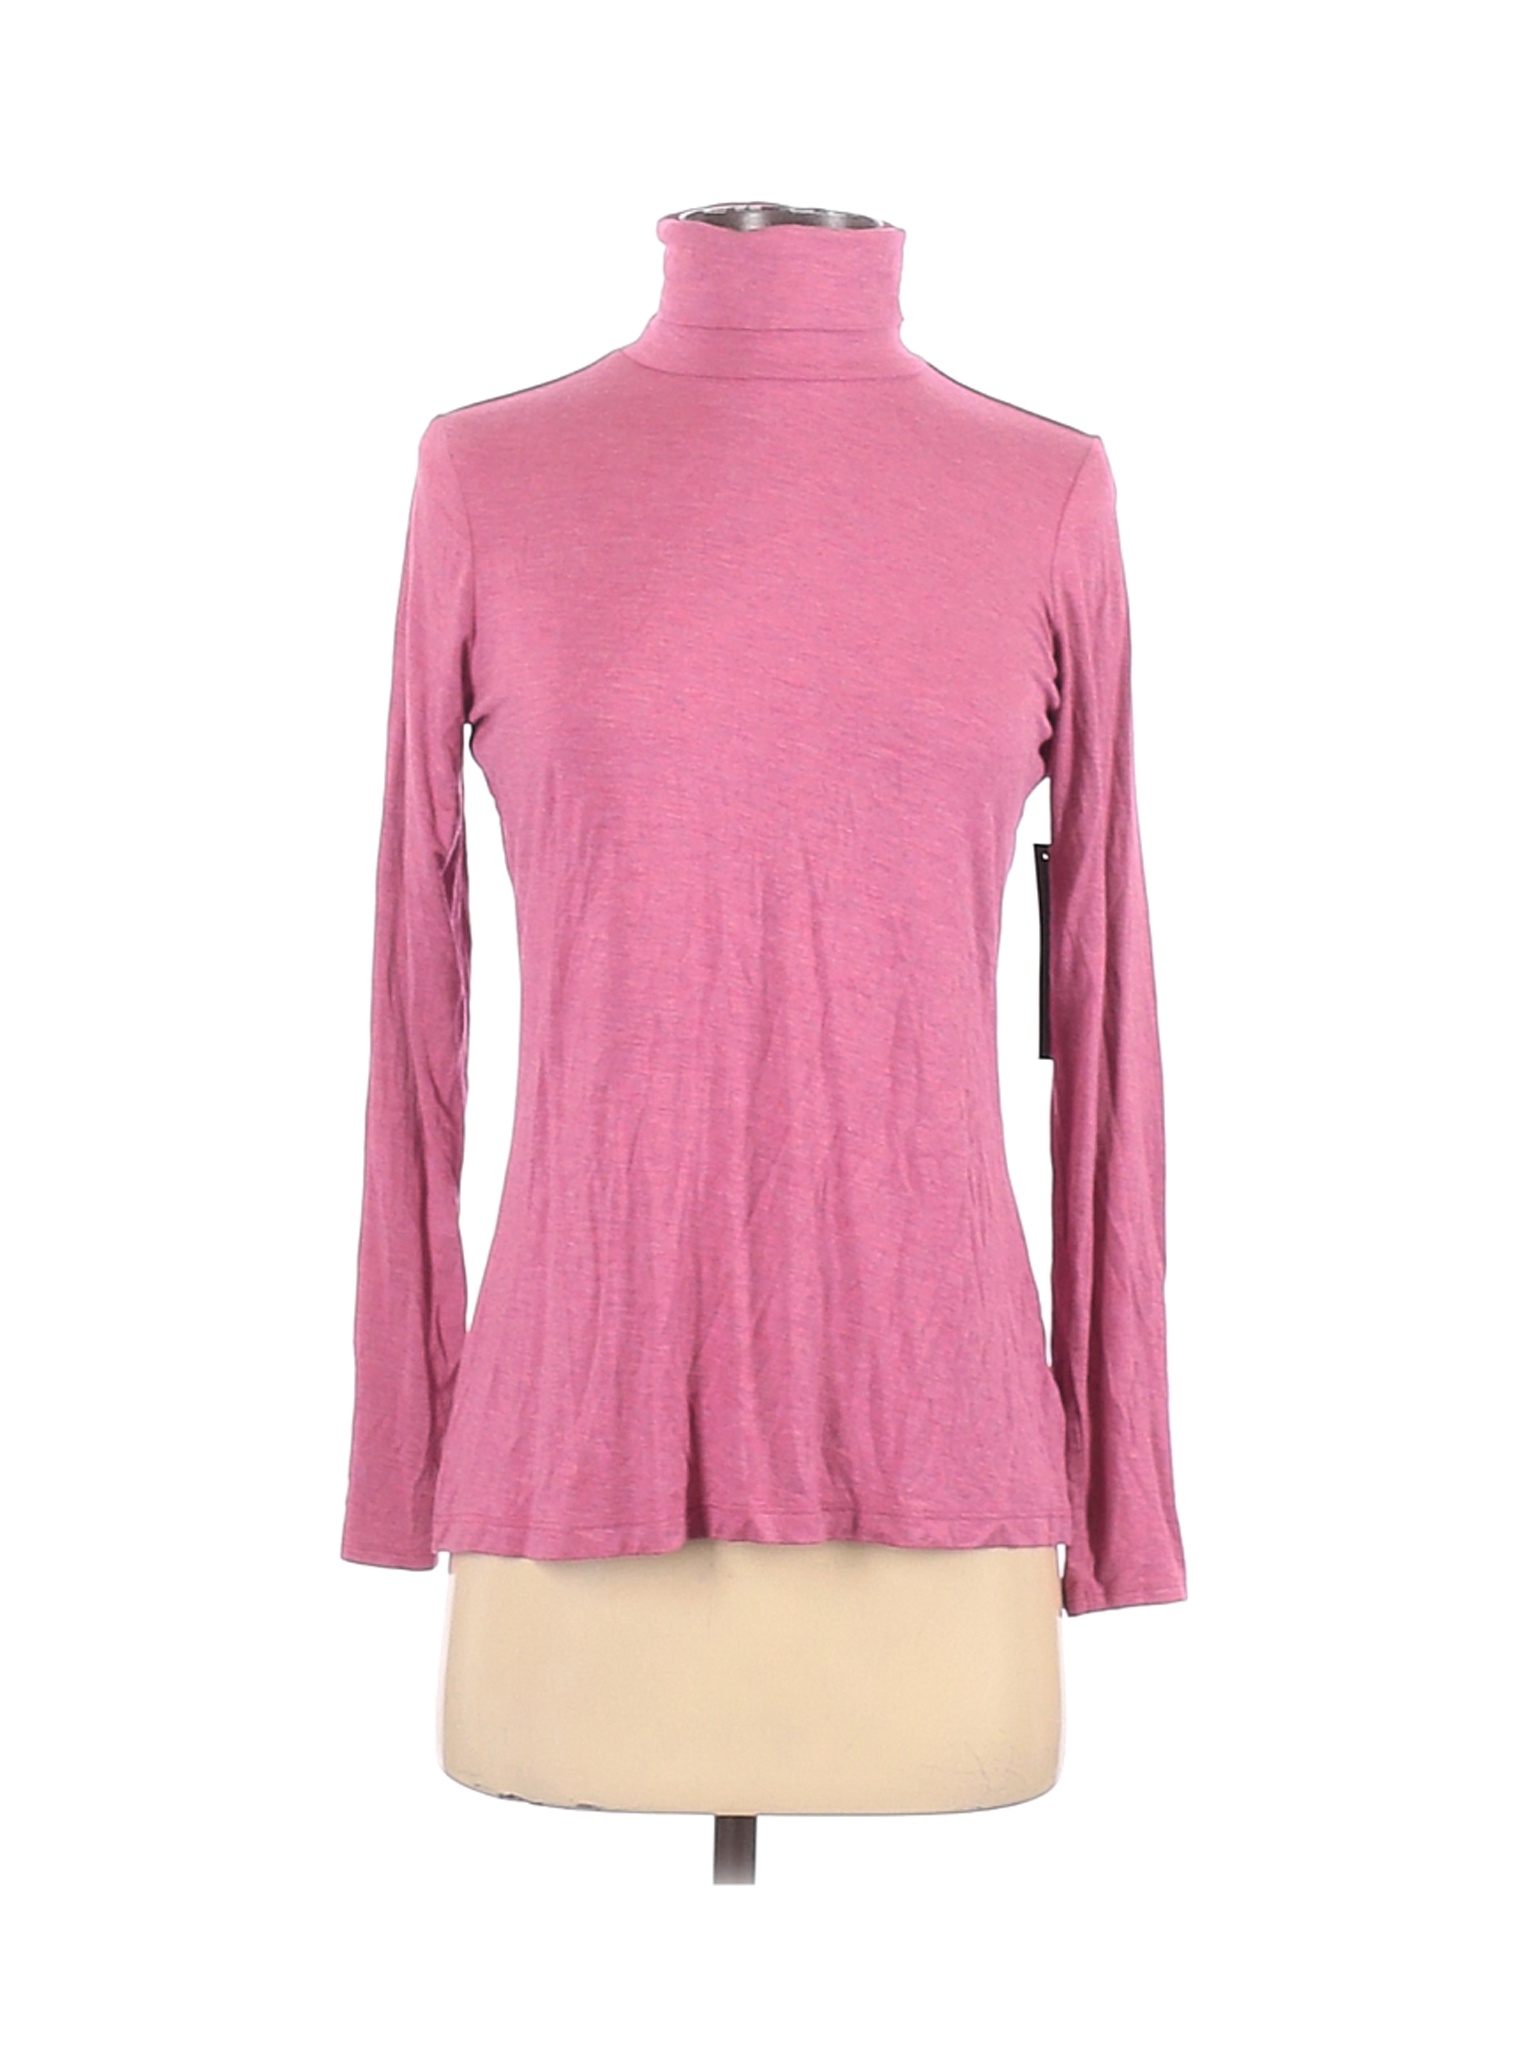 NWT Tahari Women Pink Long Sleeve Turtleneck XS | eBay